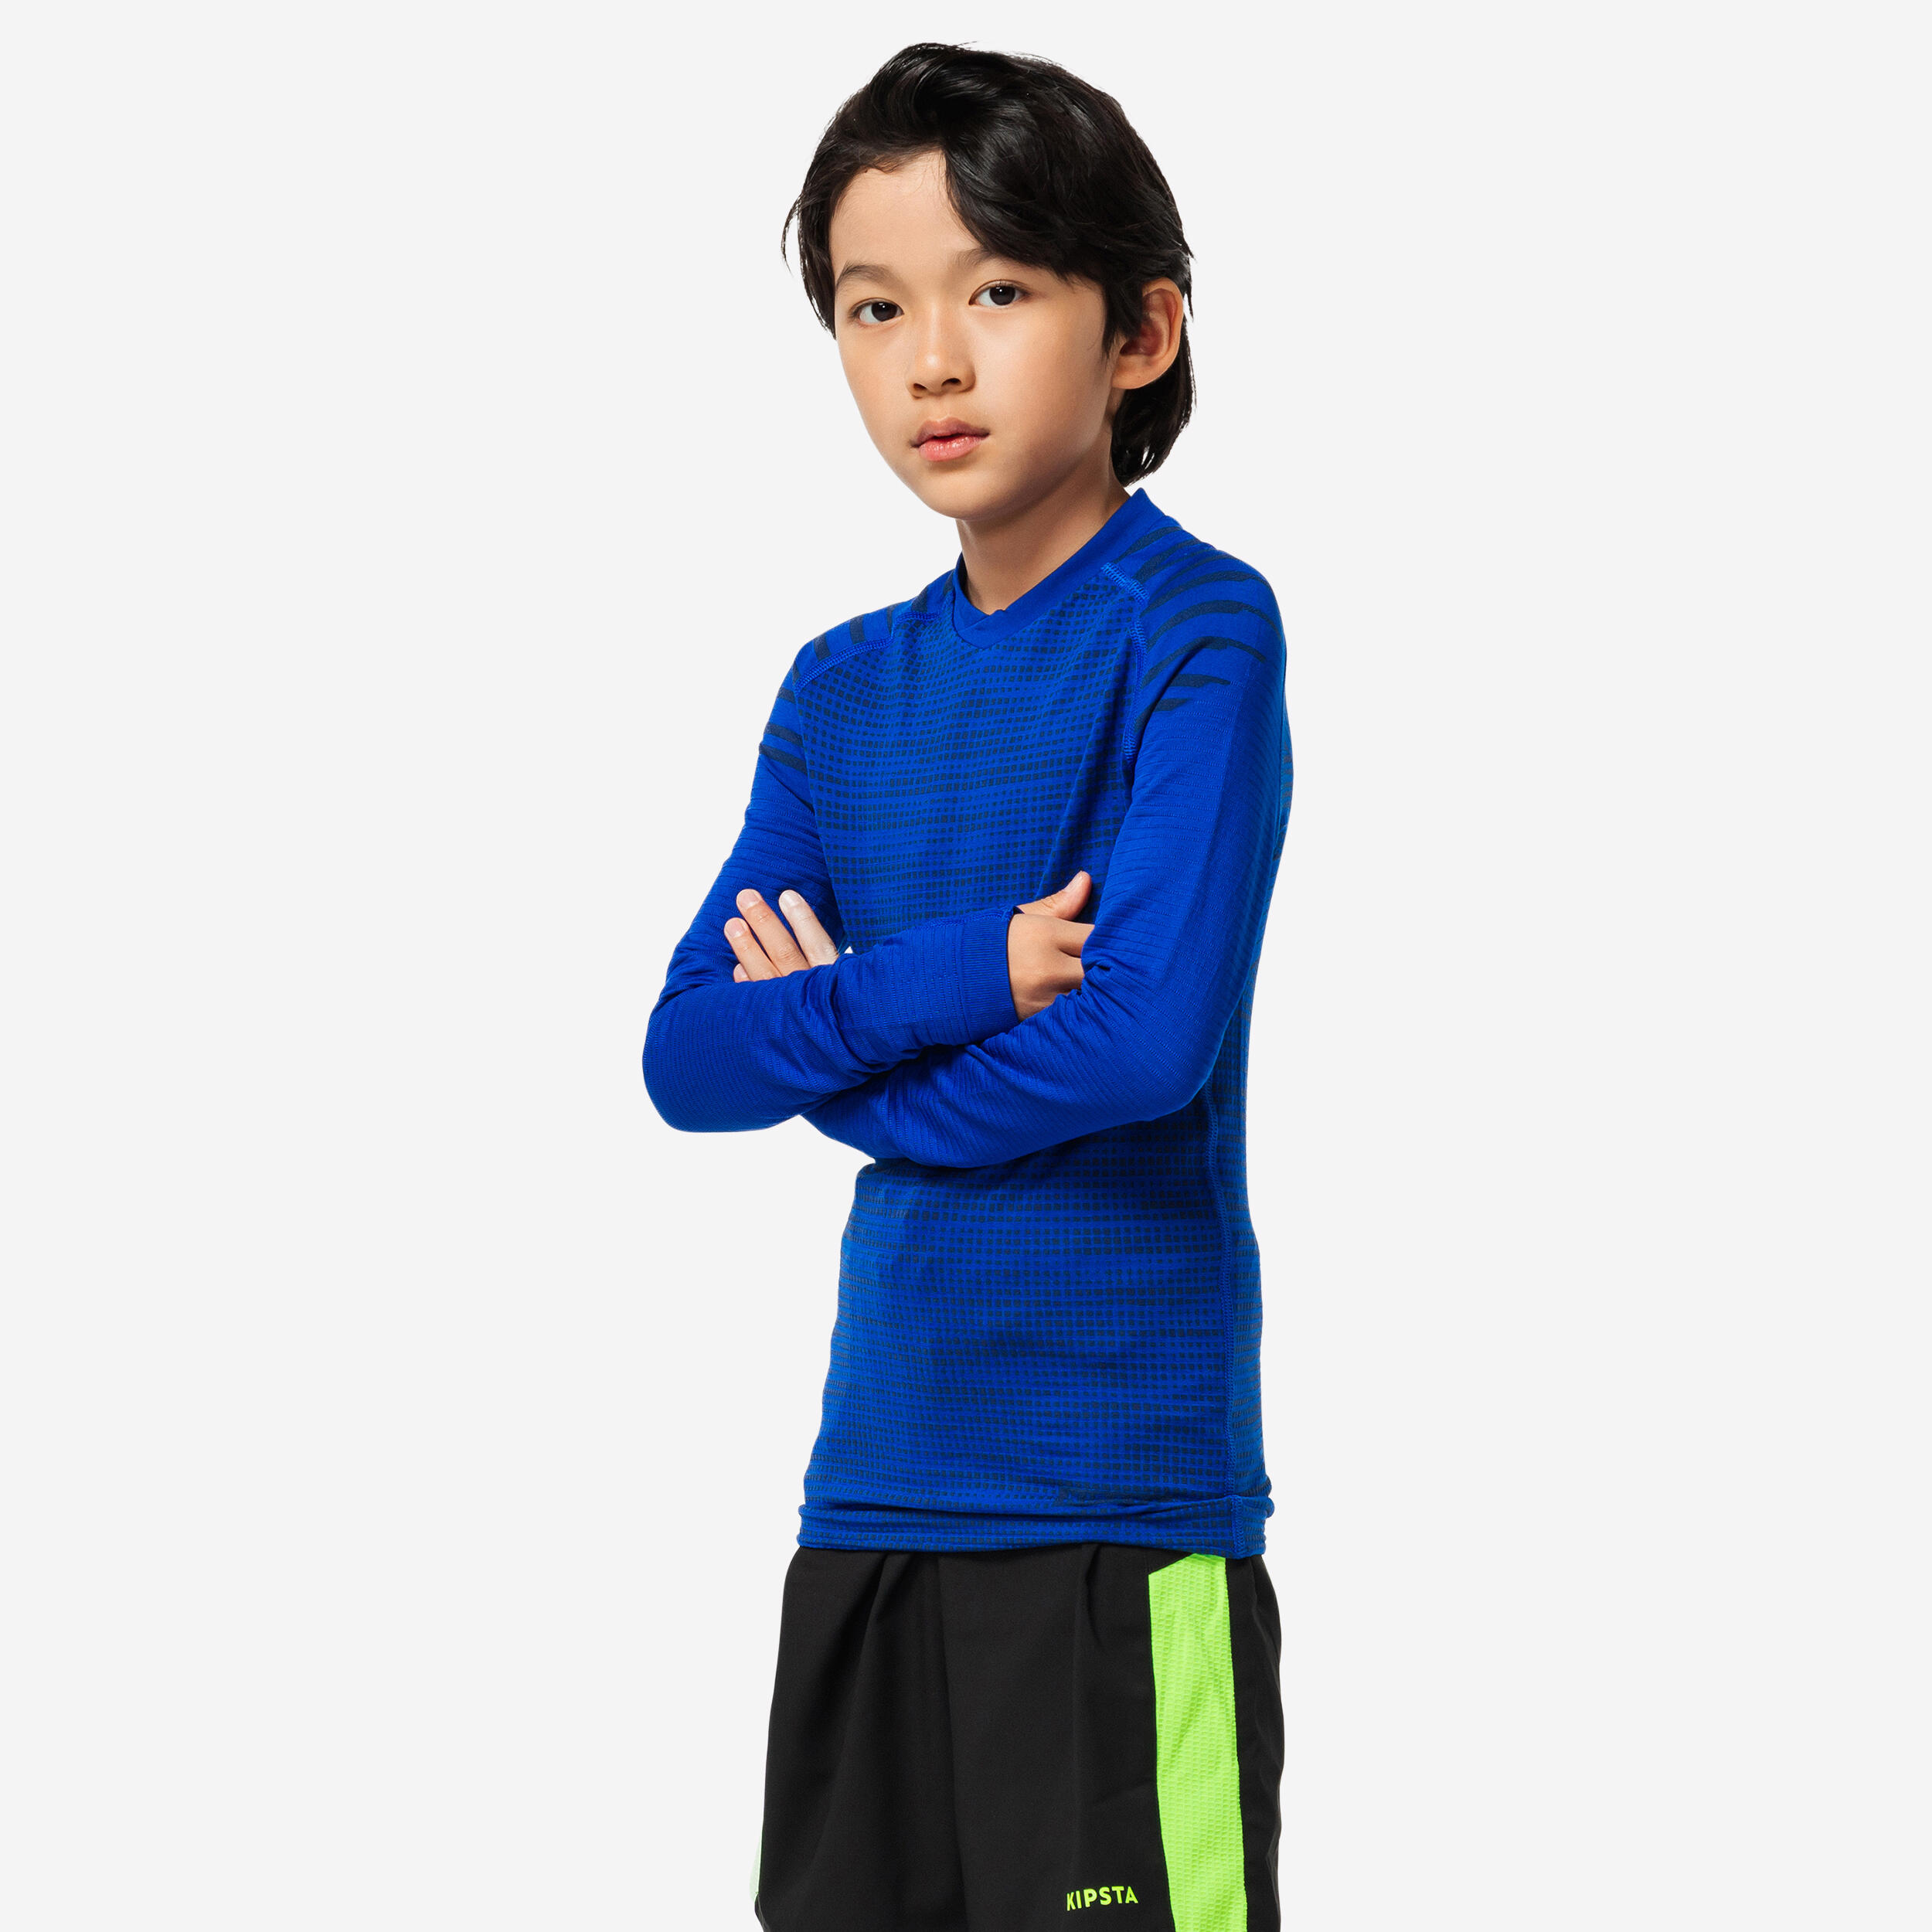 Kids' Long-Sleeved Thermal Base Layer Top Keepdry 500 - Indigo Blue 1/9